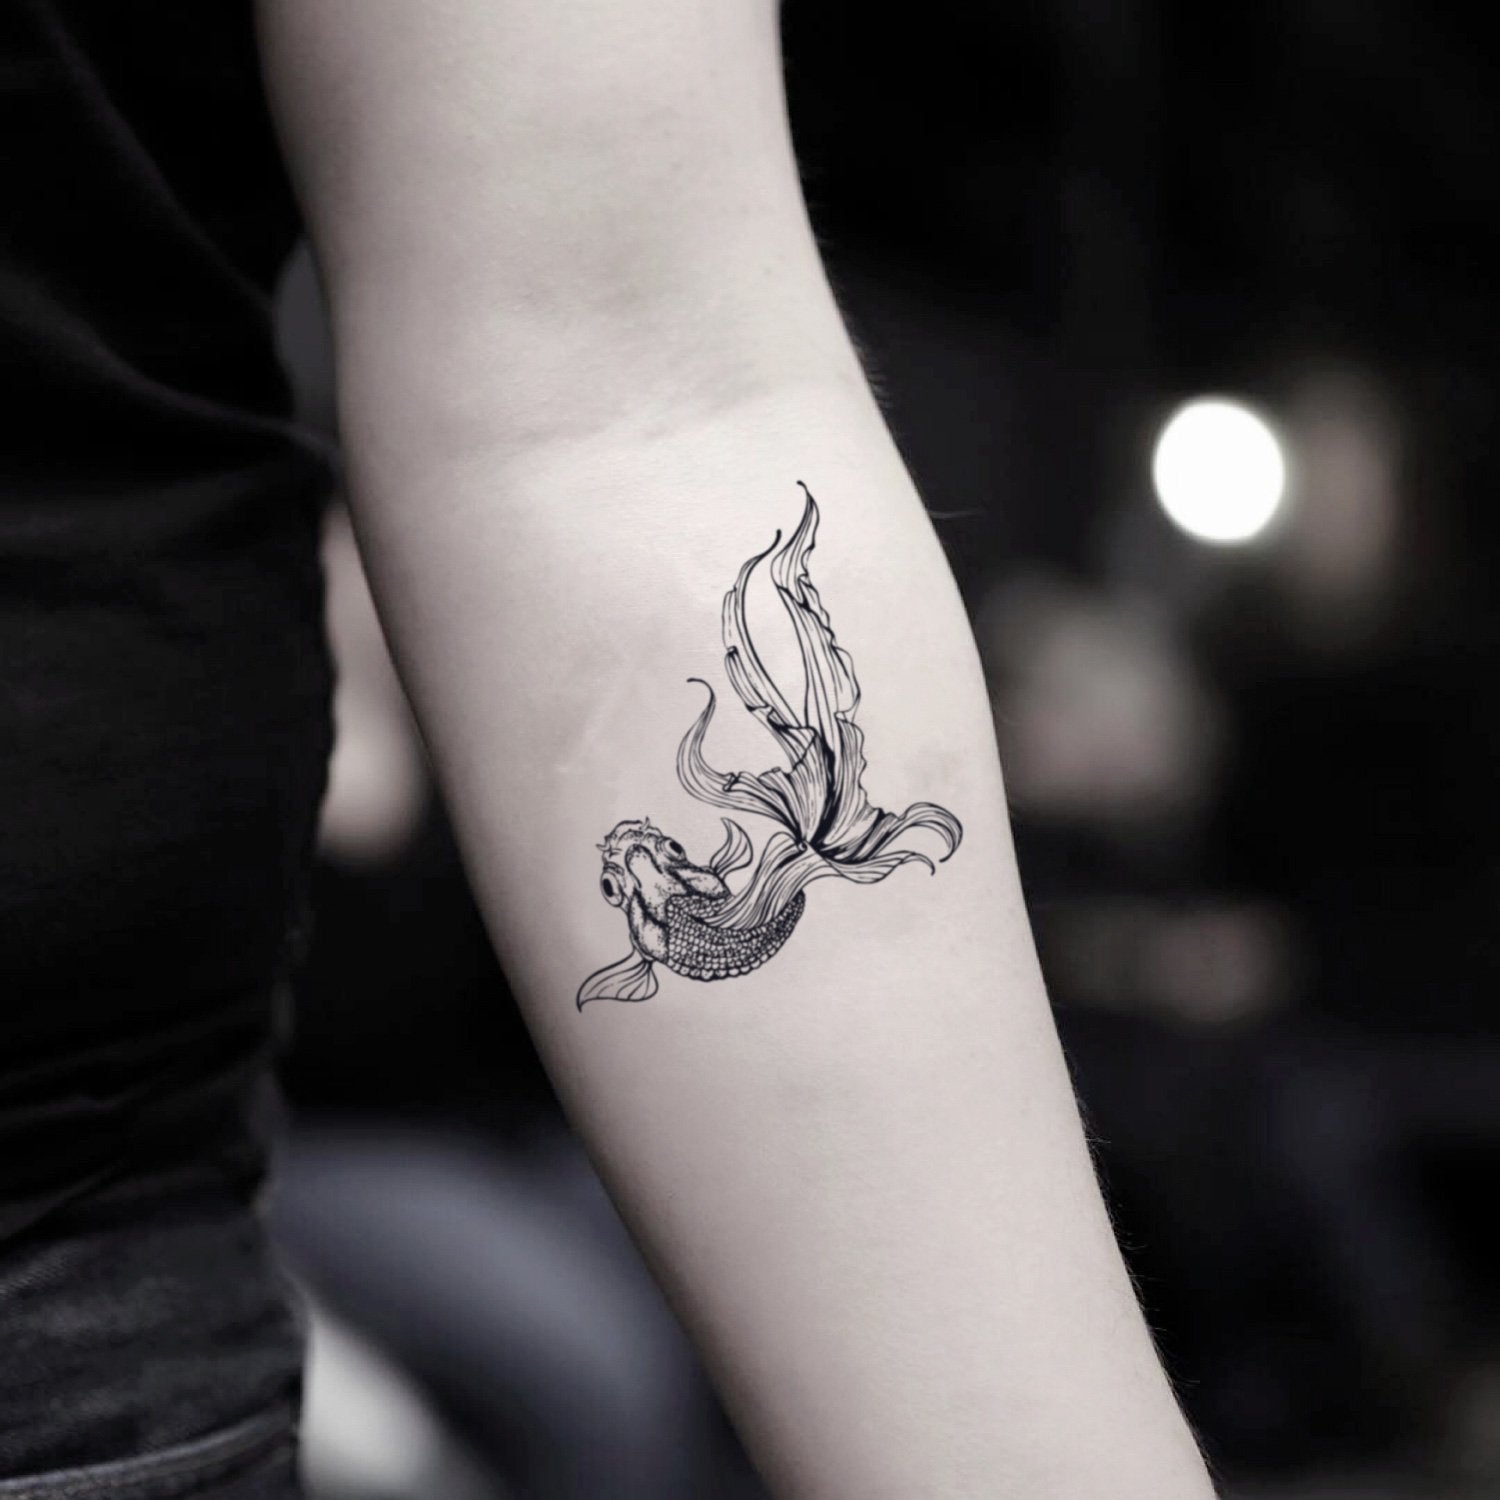 fake small goldfish betta fighting koi fish animal temporary tattoo sticker design idea on inner arm